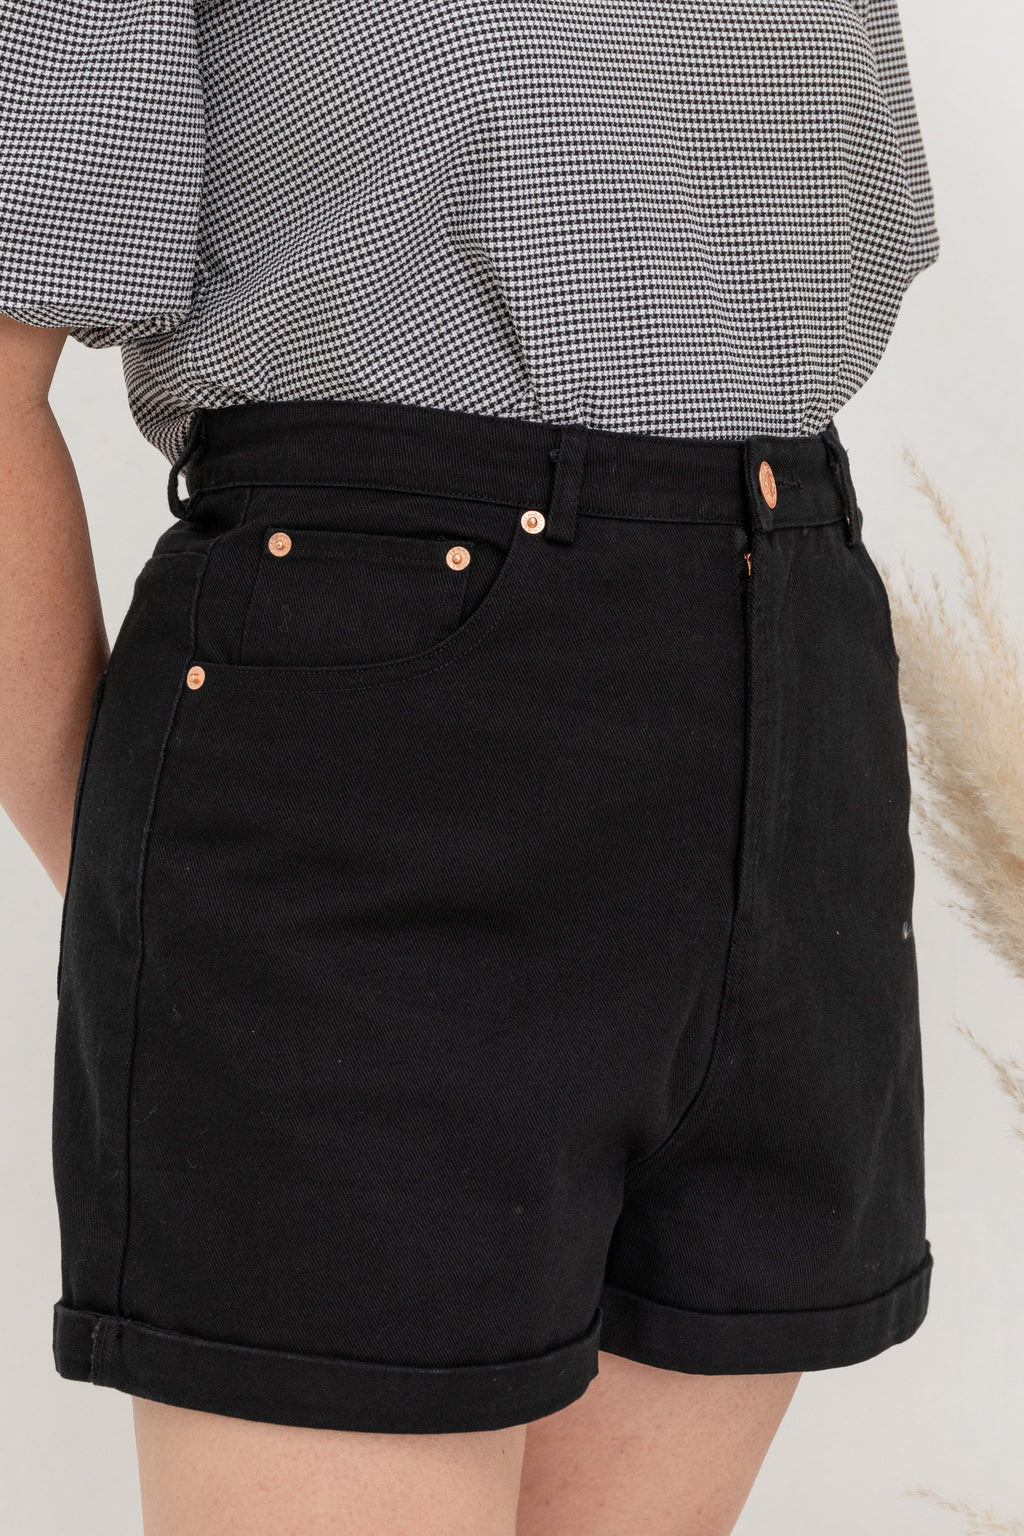 Roll Up Cuff Premium Denim High Waist Shorts (Black)